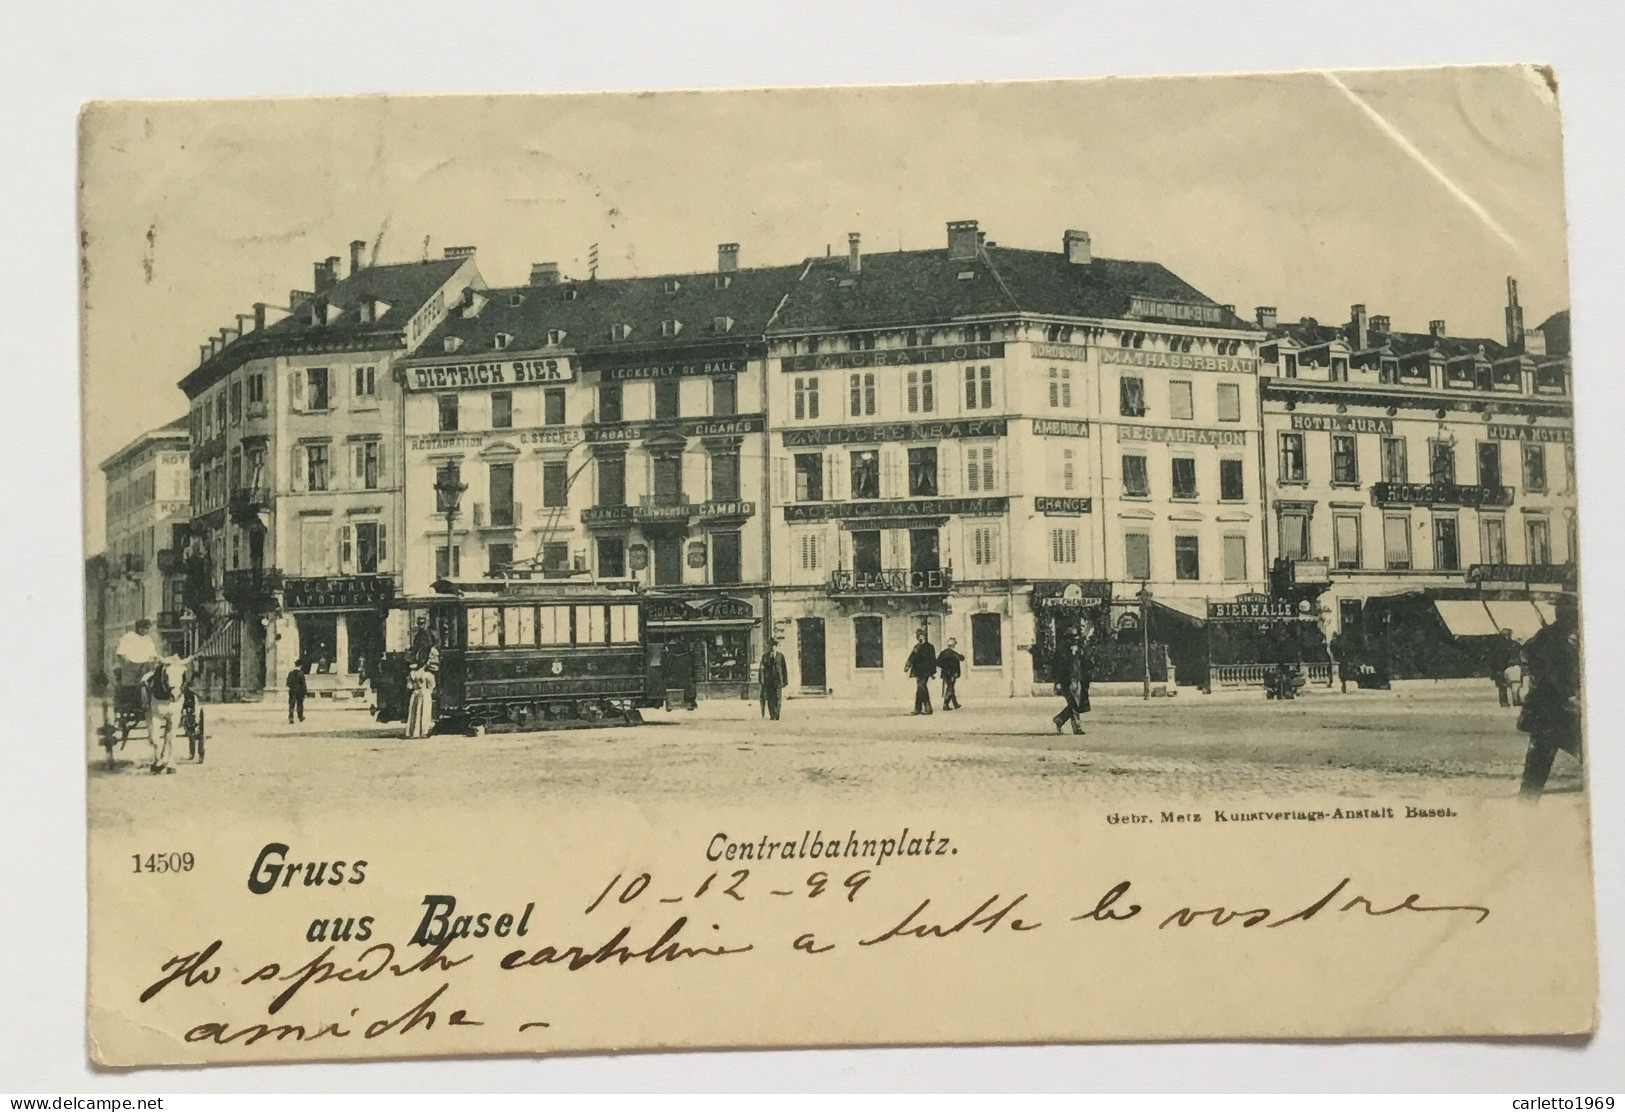 GRUSS AUS BASEL - CENTRALBAHNPLATZ 1899 TRAM + INSEGNE - VIAGGIATA FP - Bazel